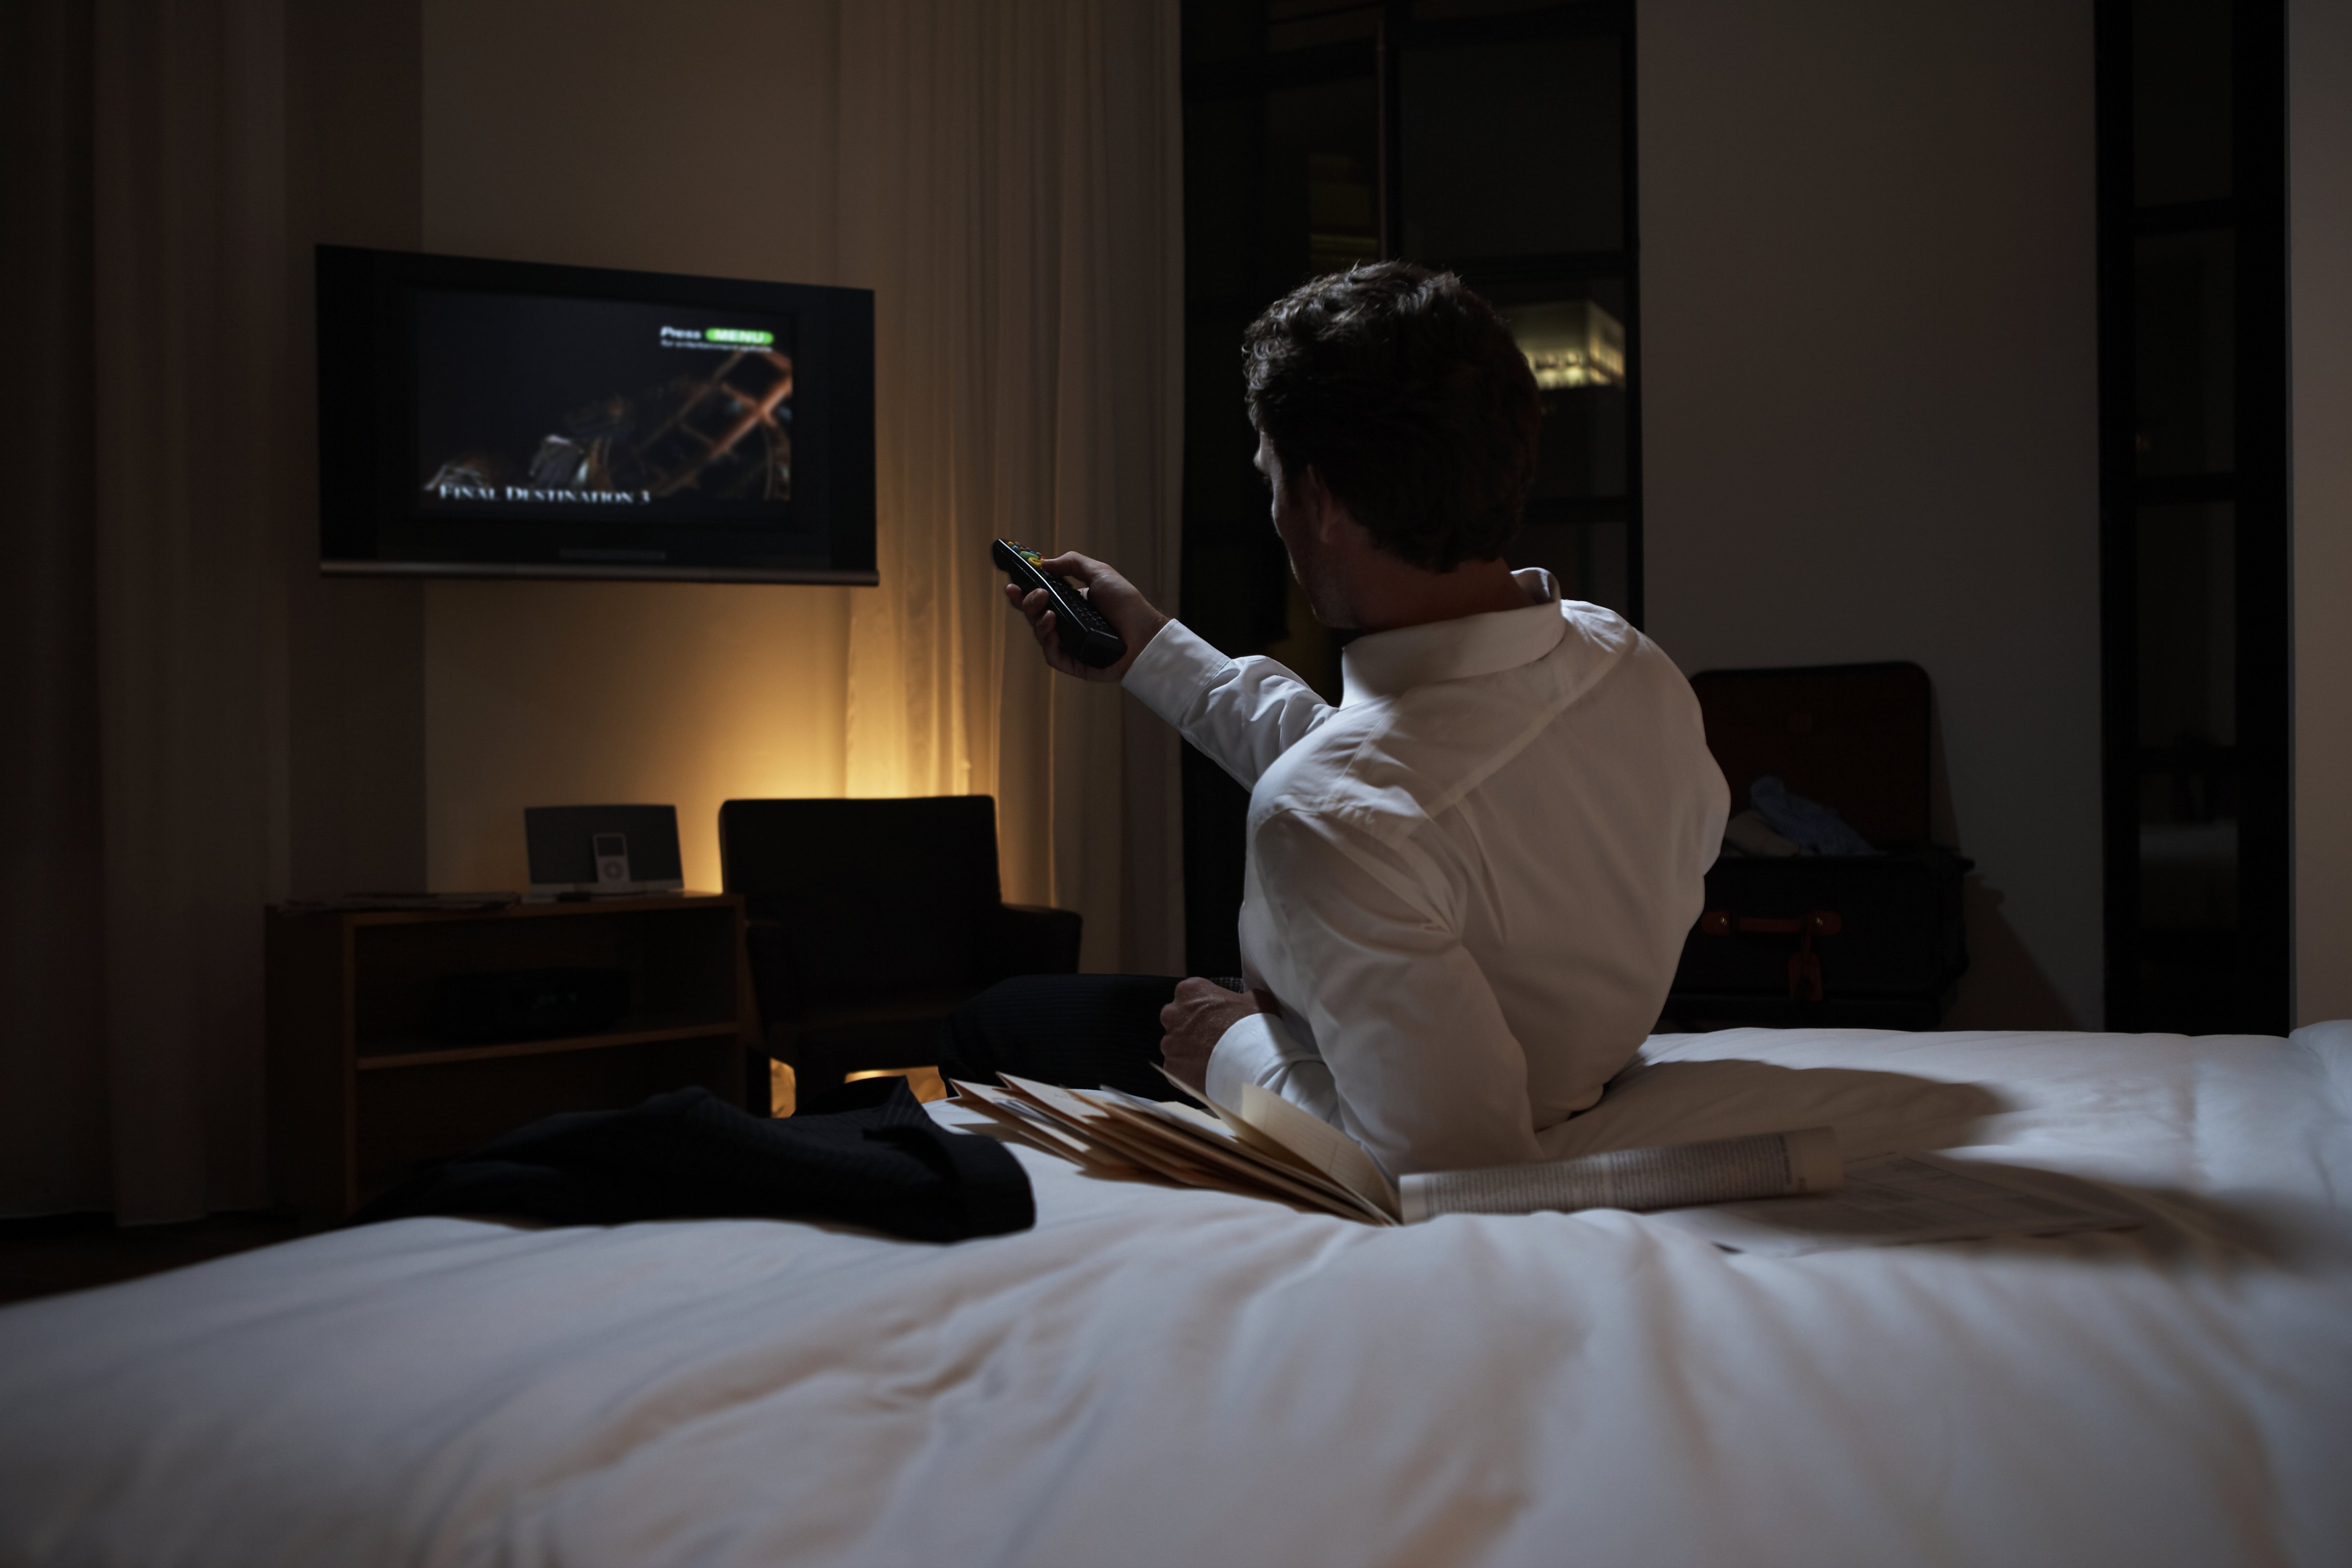 Man on hotel bed watching TV. (Leonard McLane&mdash;Getty Images)